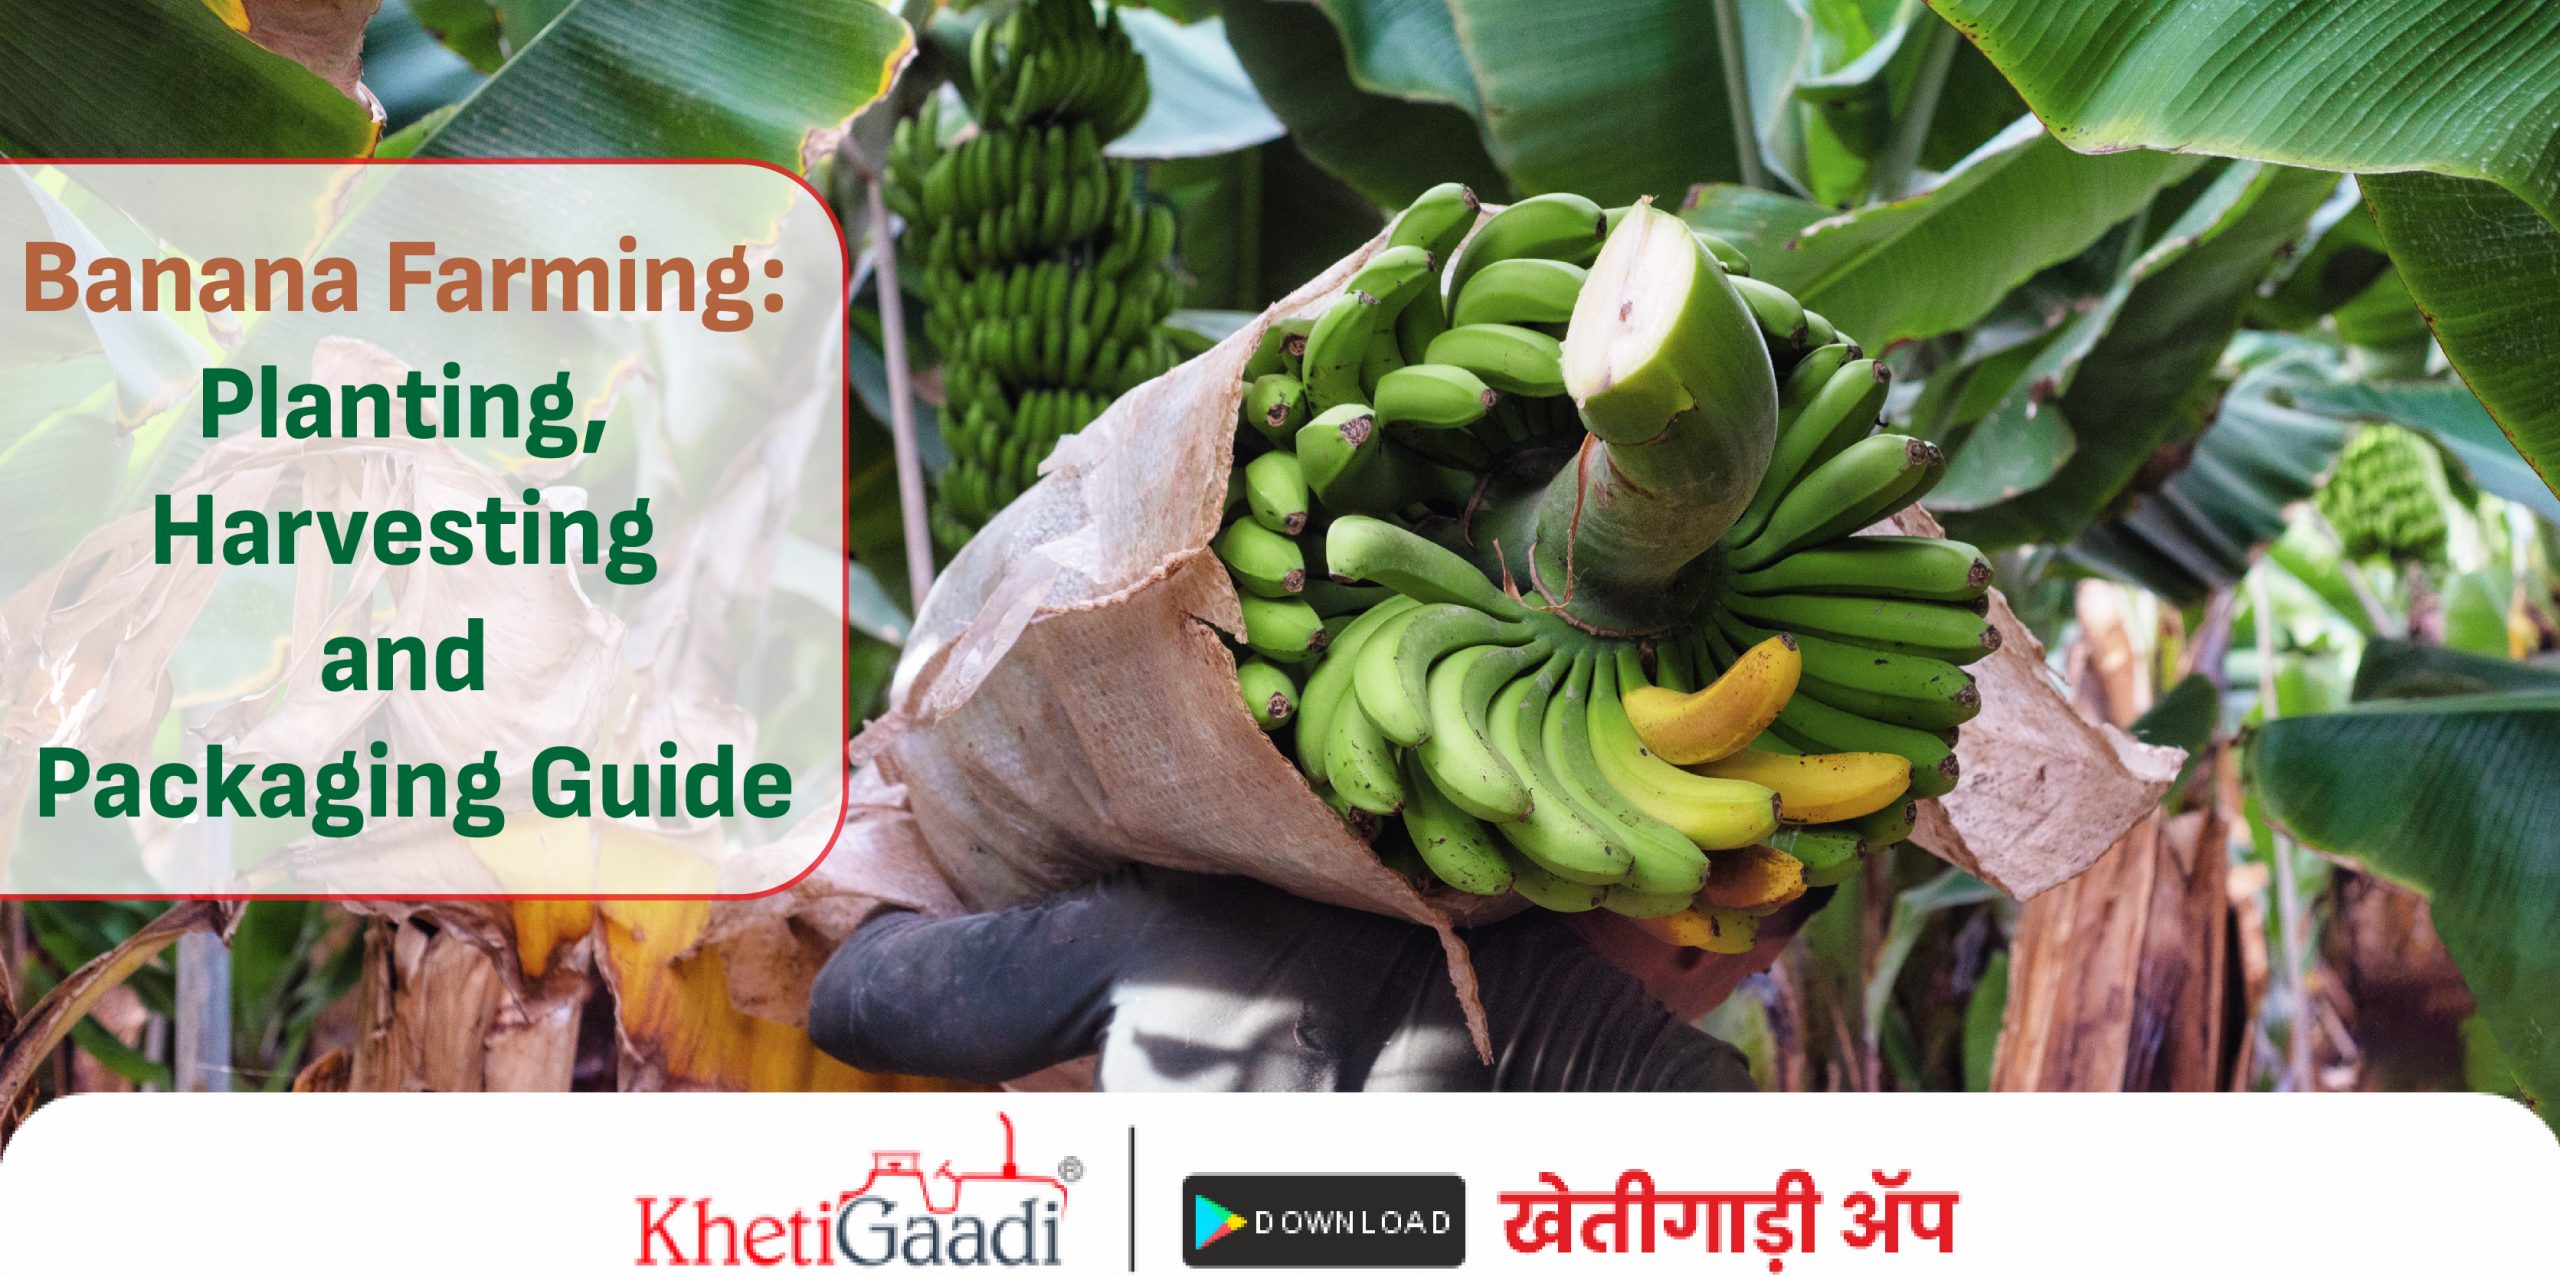 Banana Farming: Planting, Harvesting and Packaging Guide